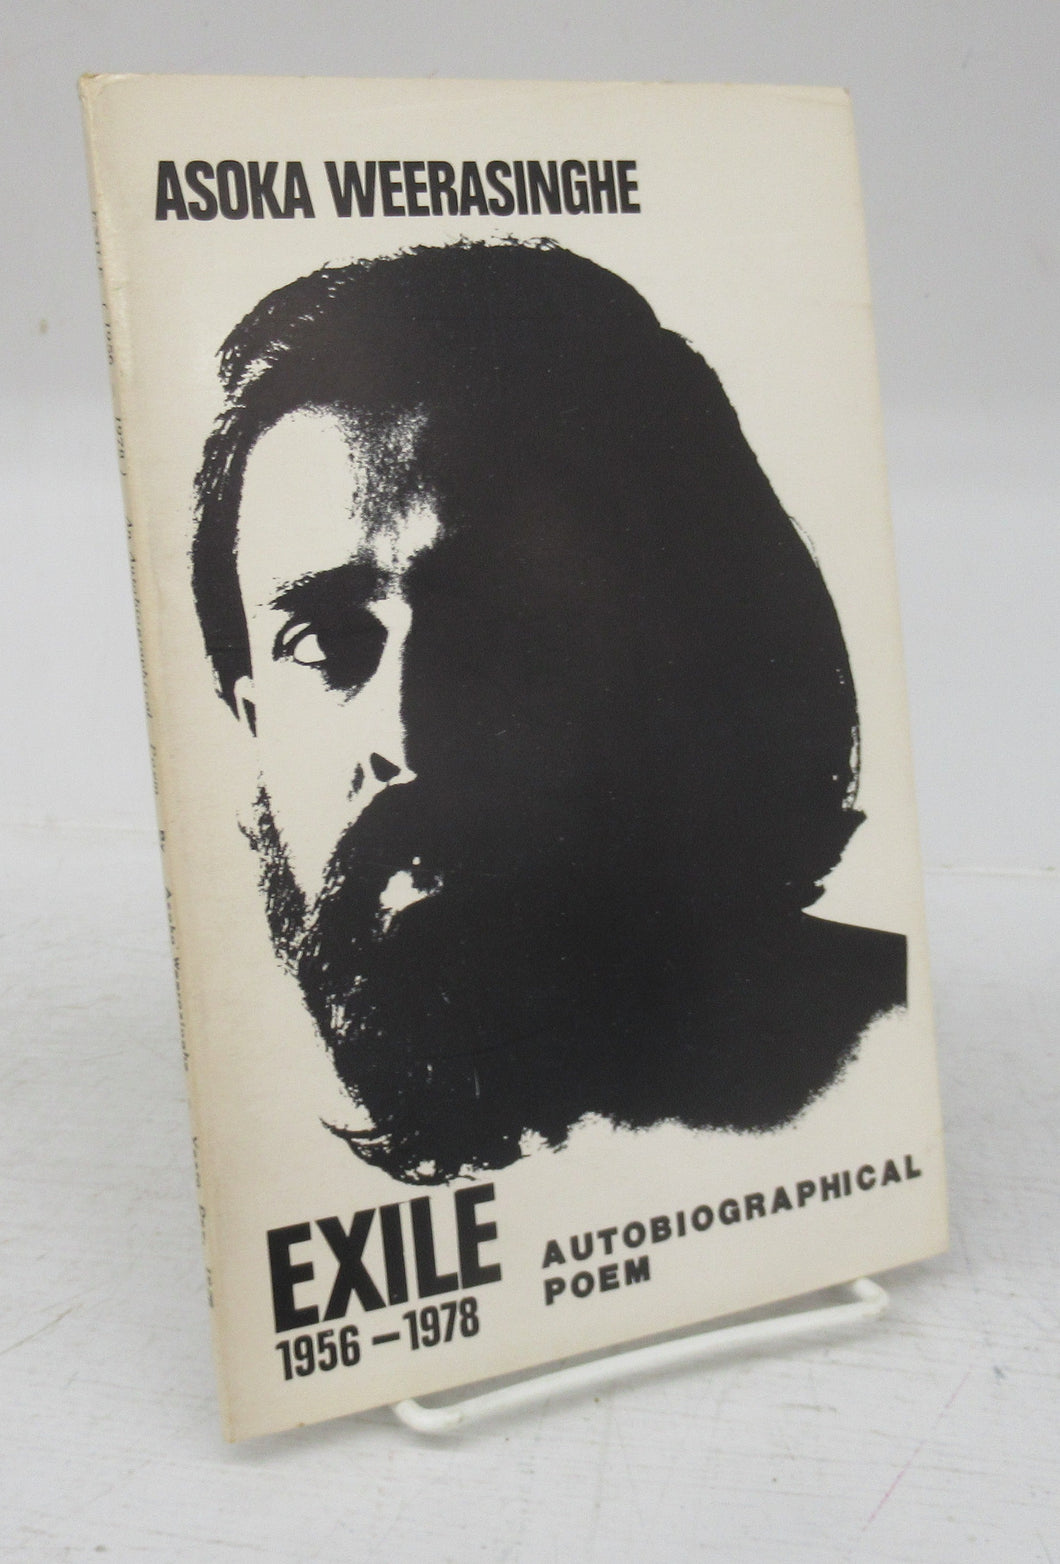 Exile 1956-1978: Autobiographical Poem